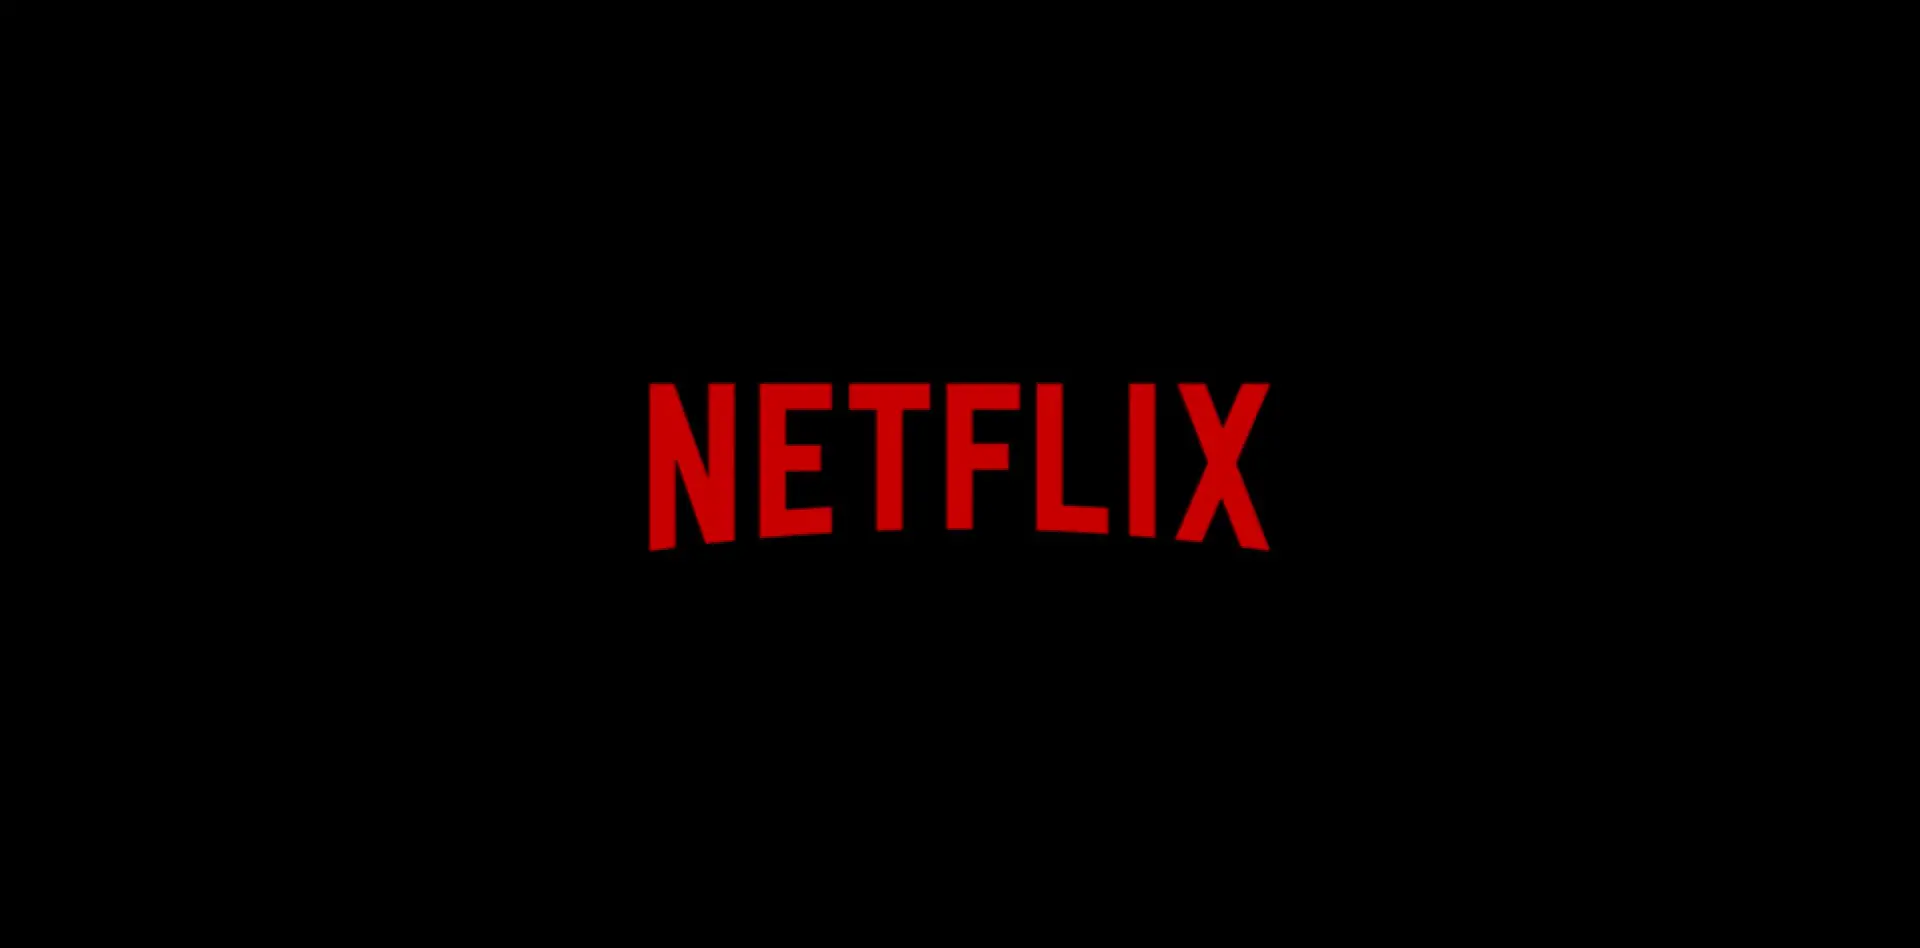 Popular Streaming Service: Netflix